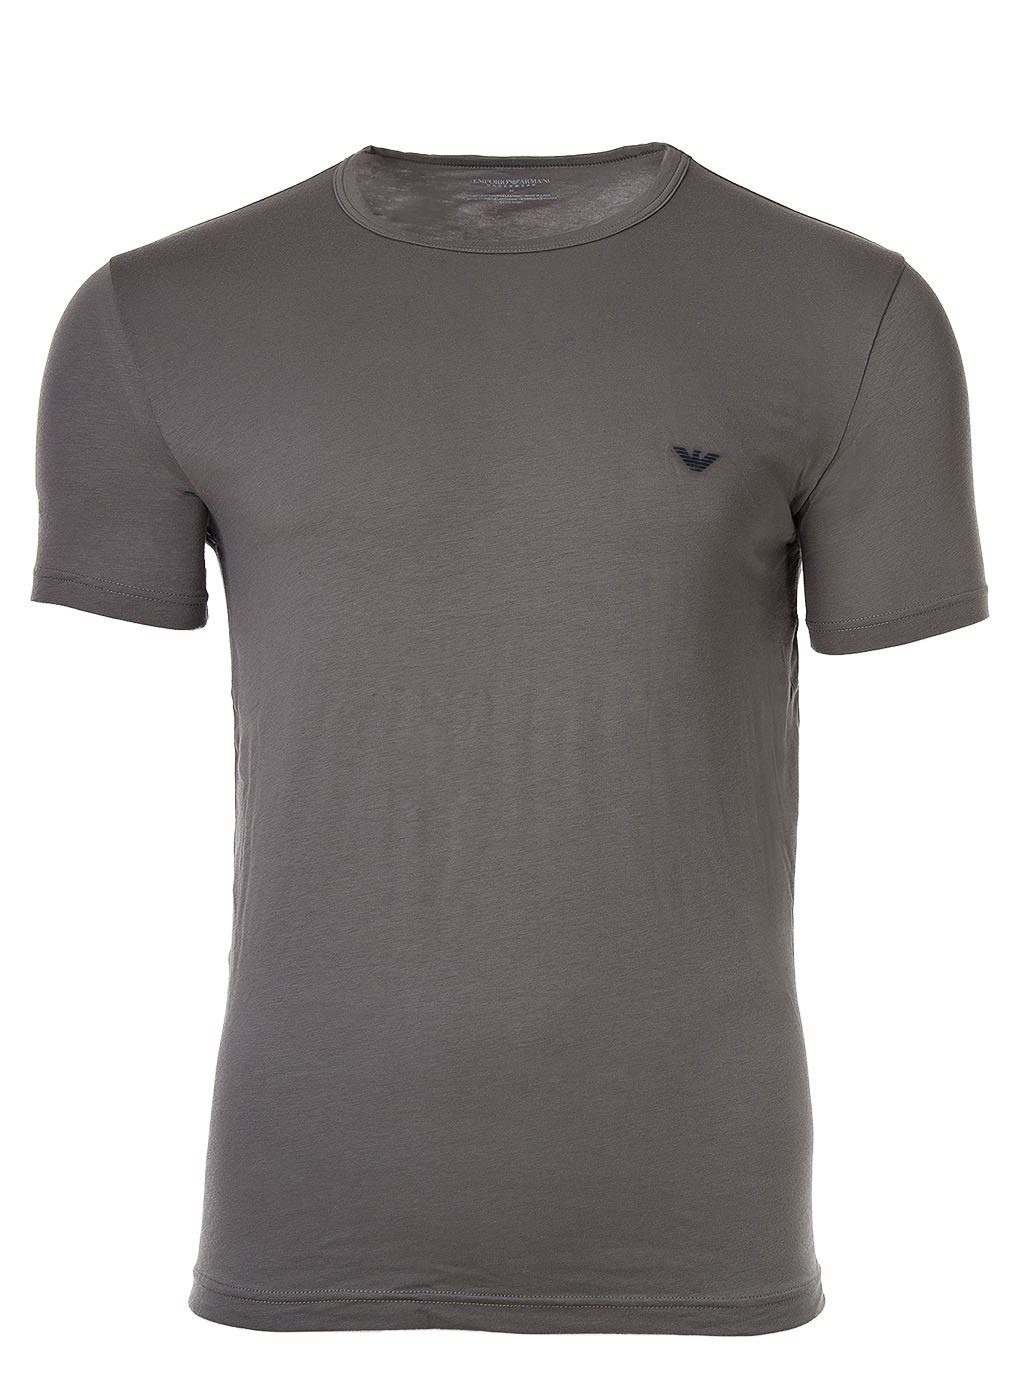 Emporio Armani T-Shirt Herren Crew grau/marine T-Shirt - 2er Rundhals Pack Neck